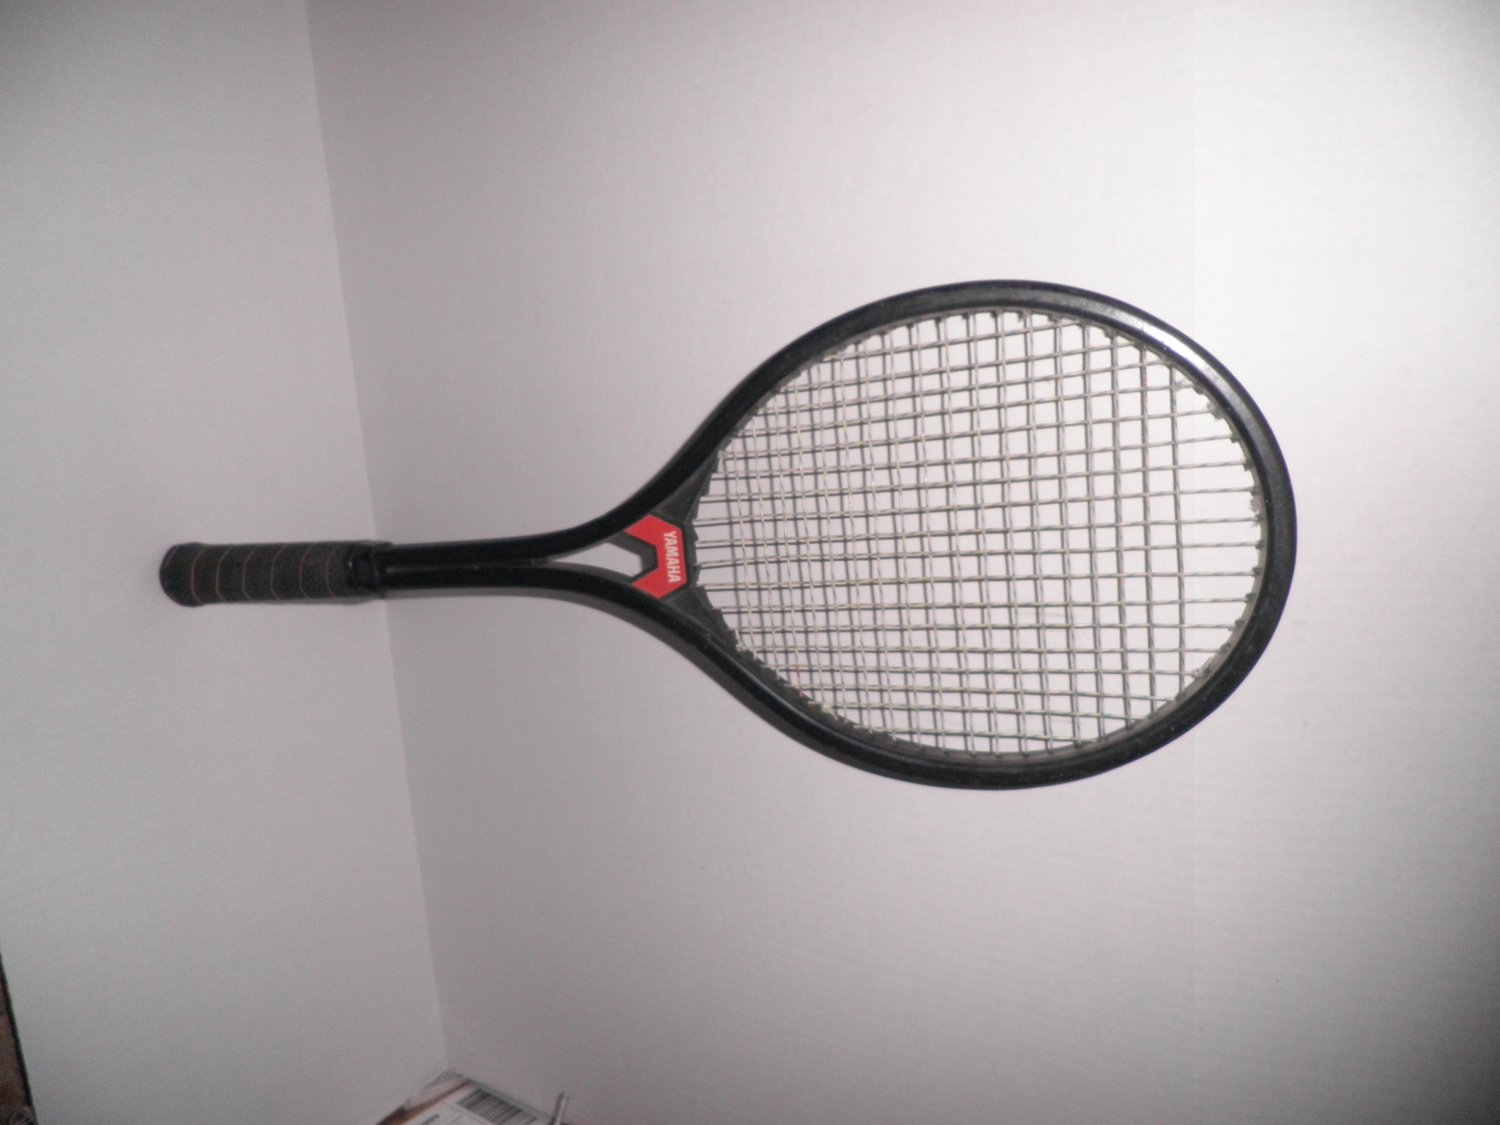 Yamaha YFG 20 tennis racquet